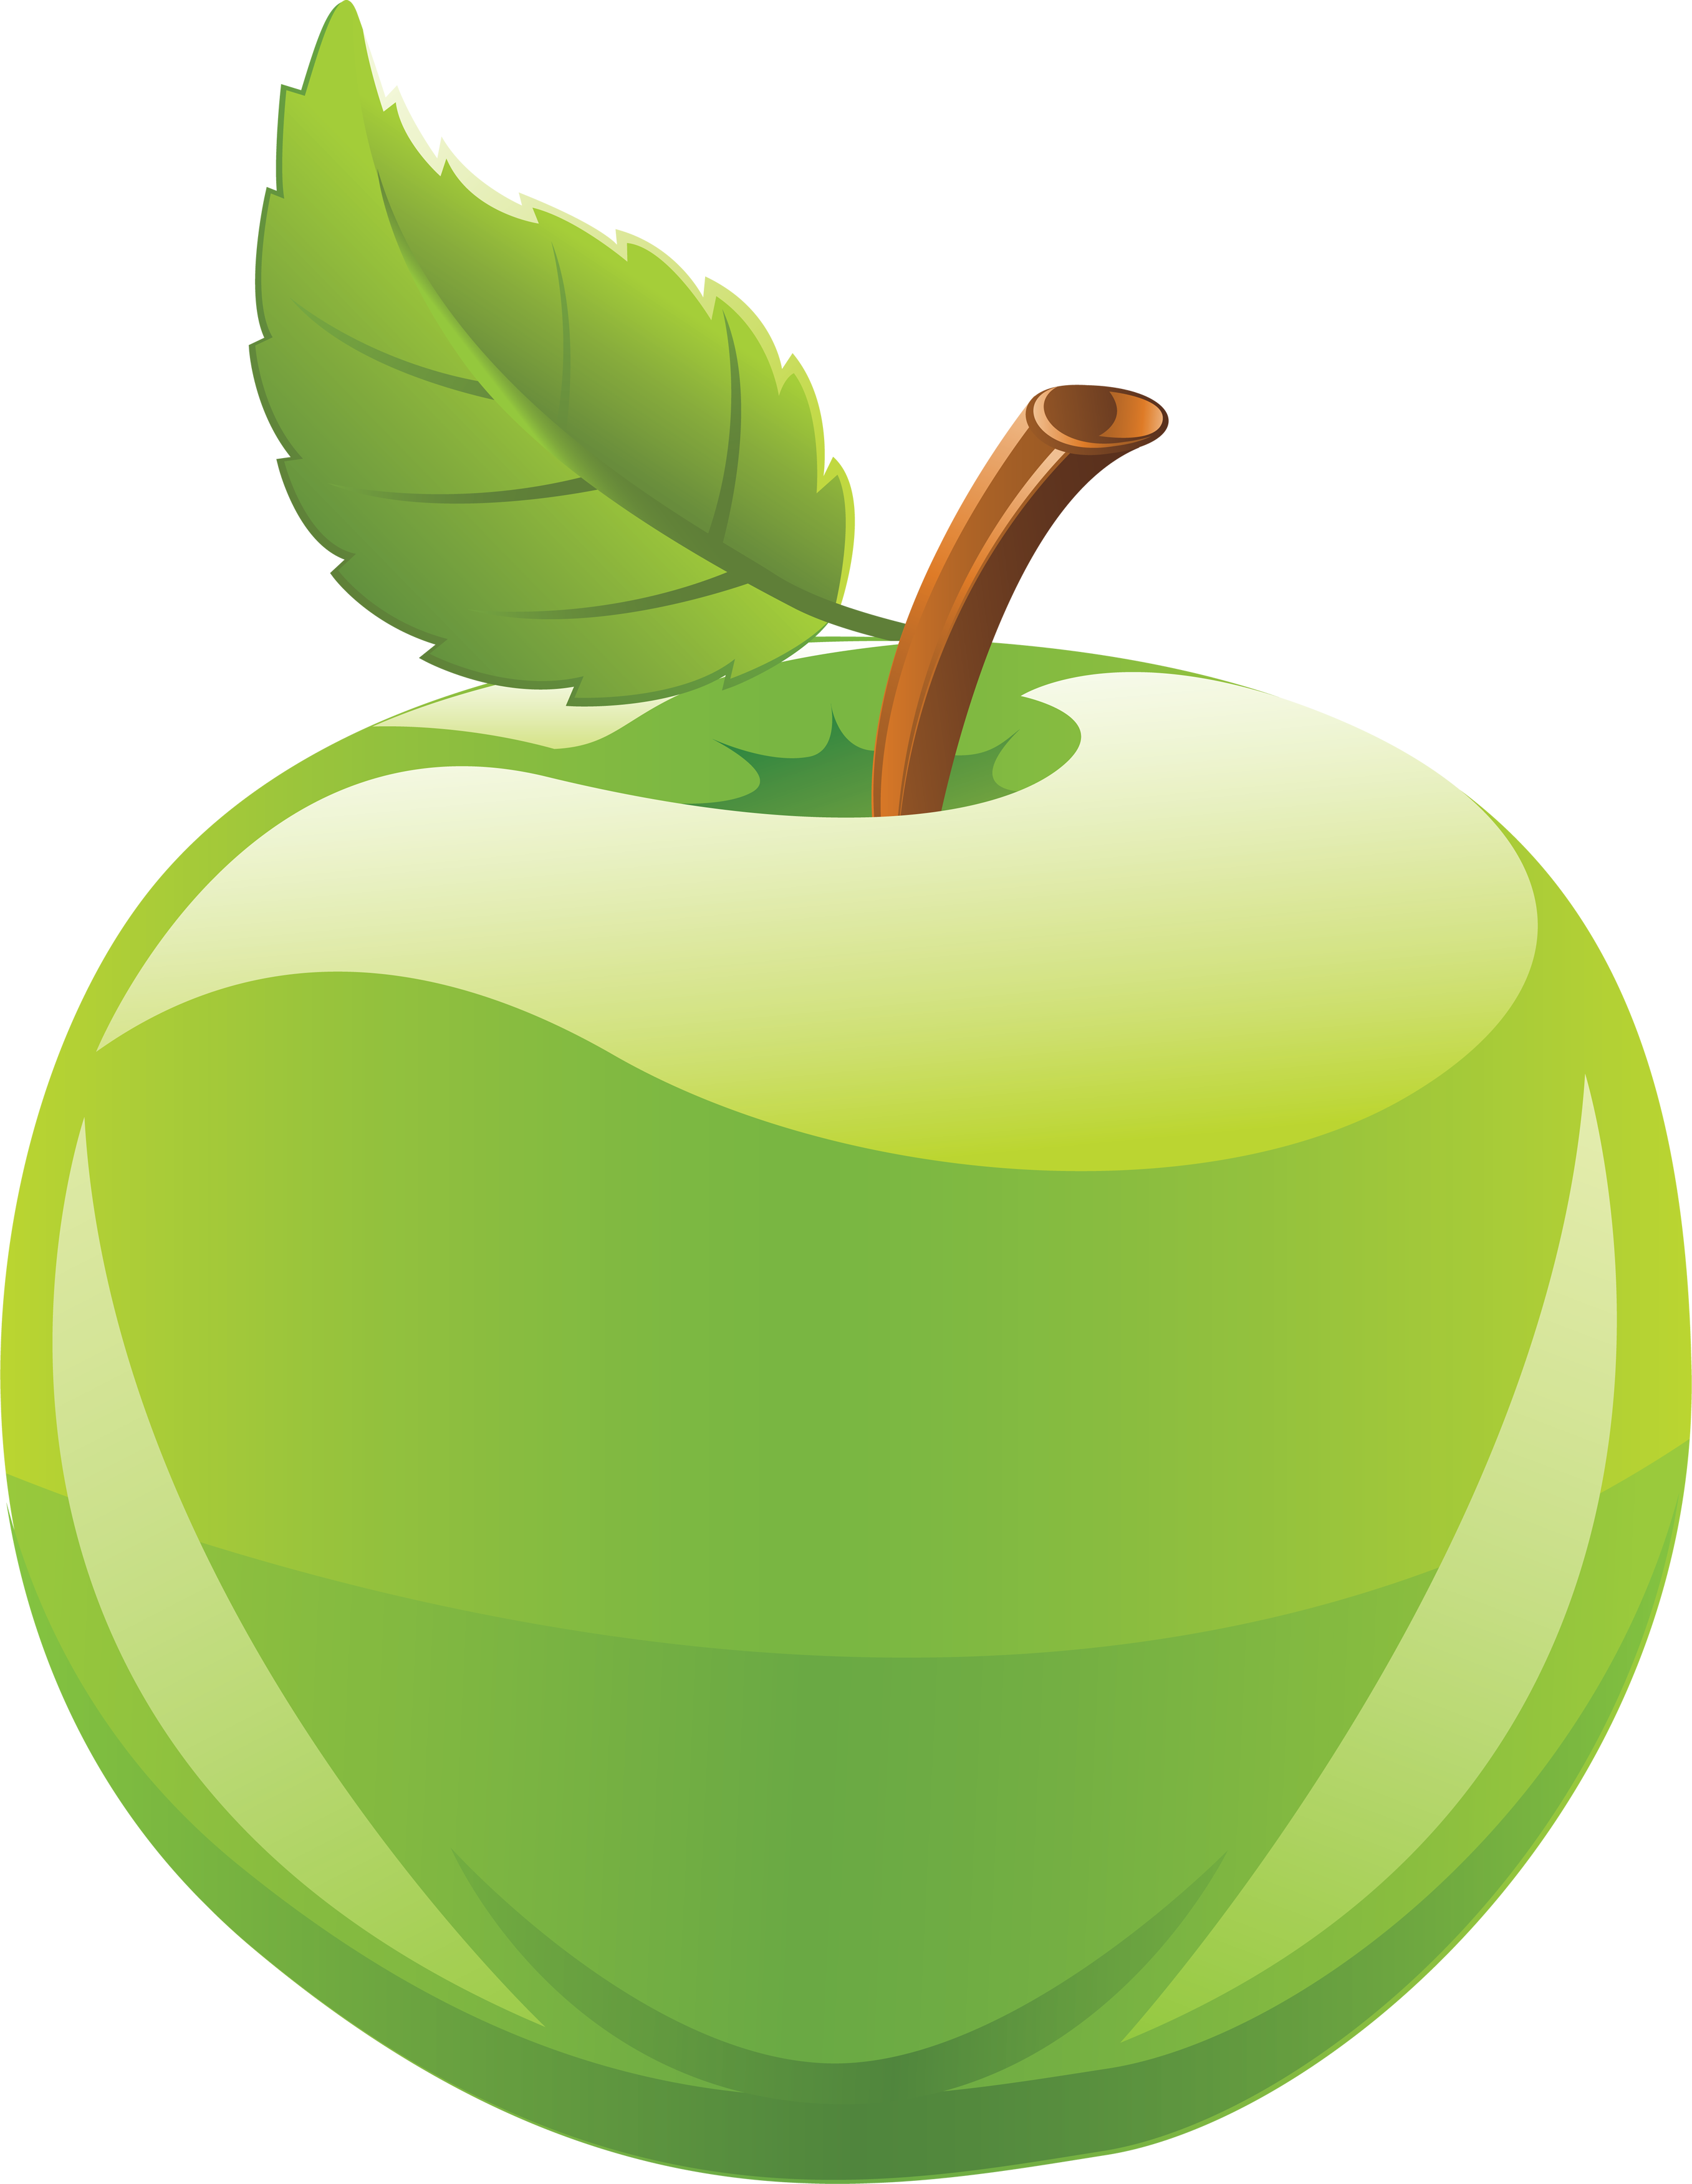 Download PNG image: Green apple PNG image